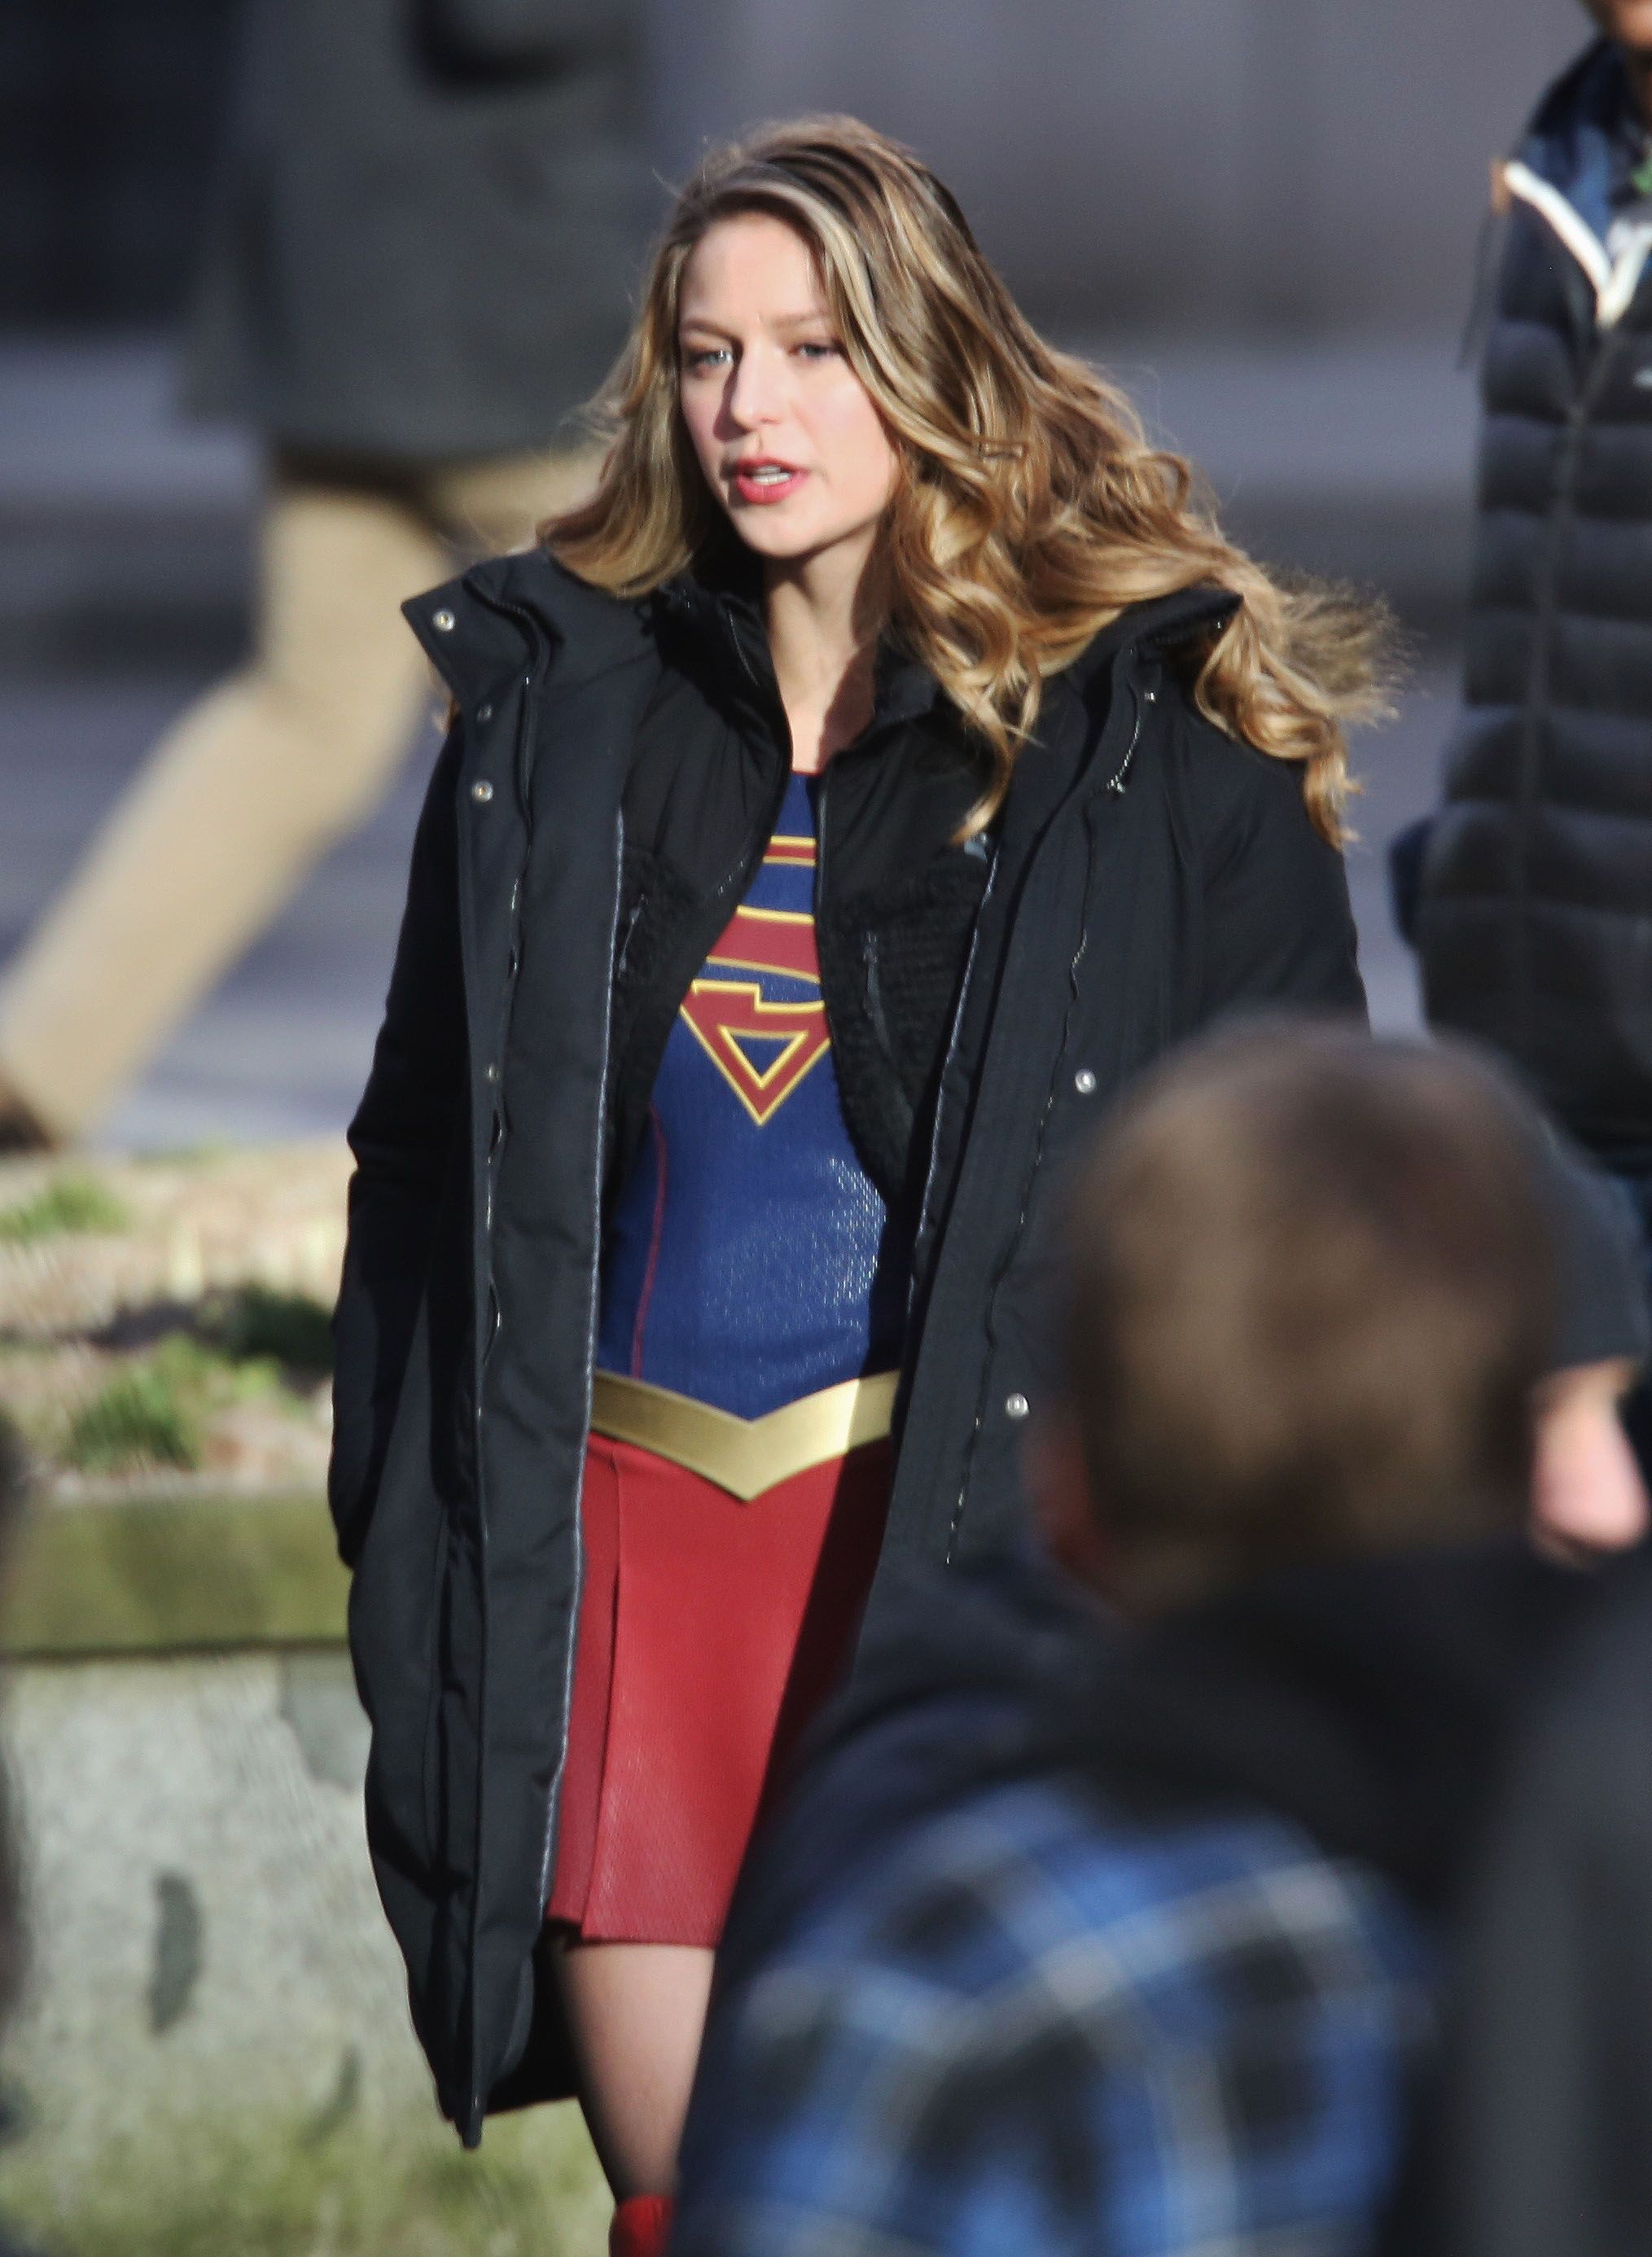 Melissa Benoist As “Supergirl”